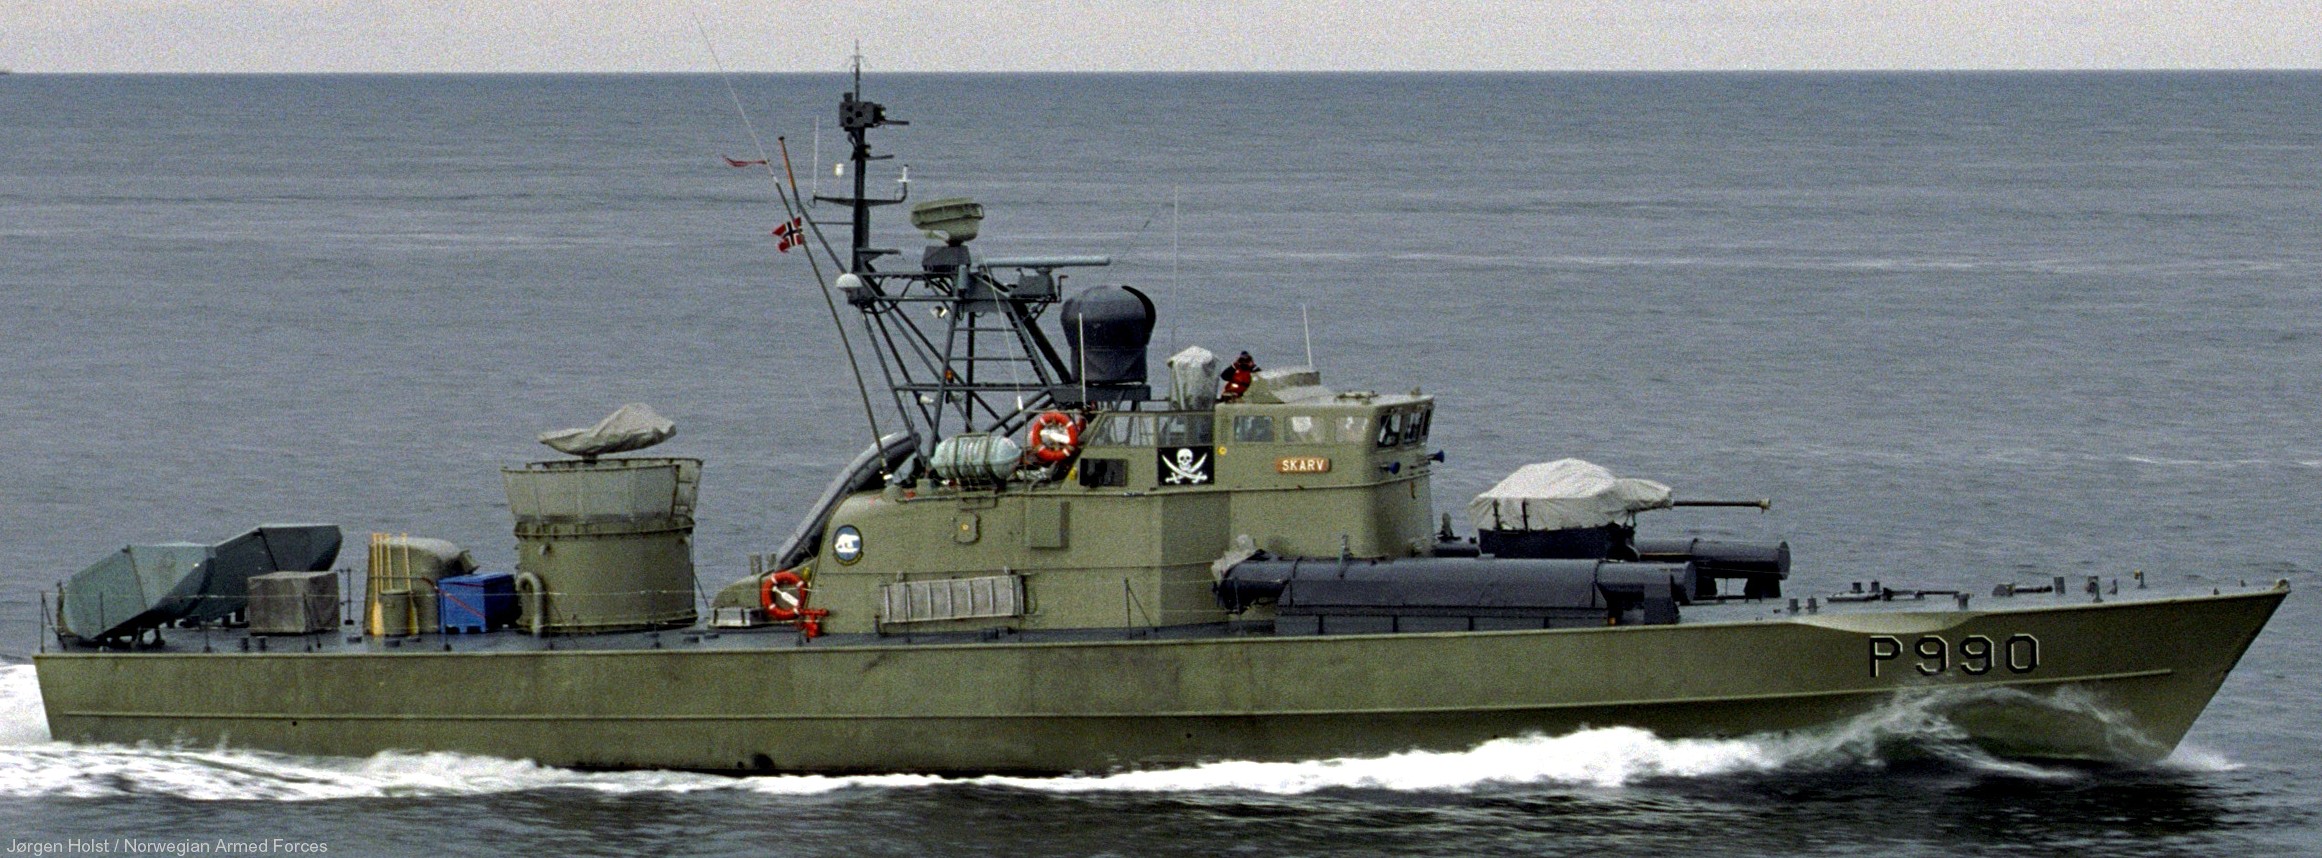 p-990 knm skarv hauk class fast attack missile torpedo craft boat norwegian navy sjøforsvaret 02